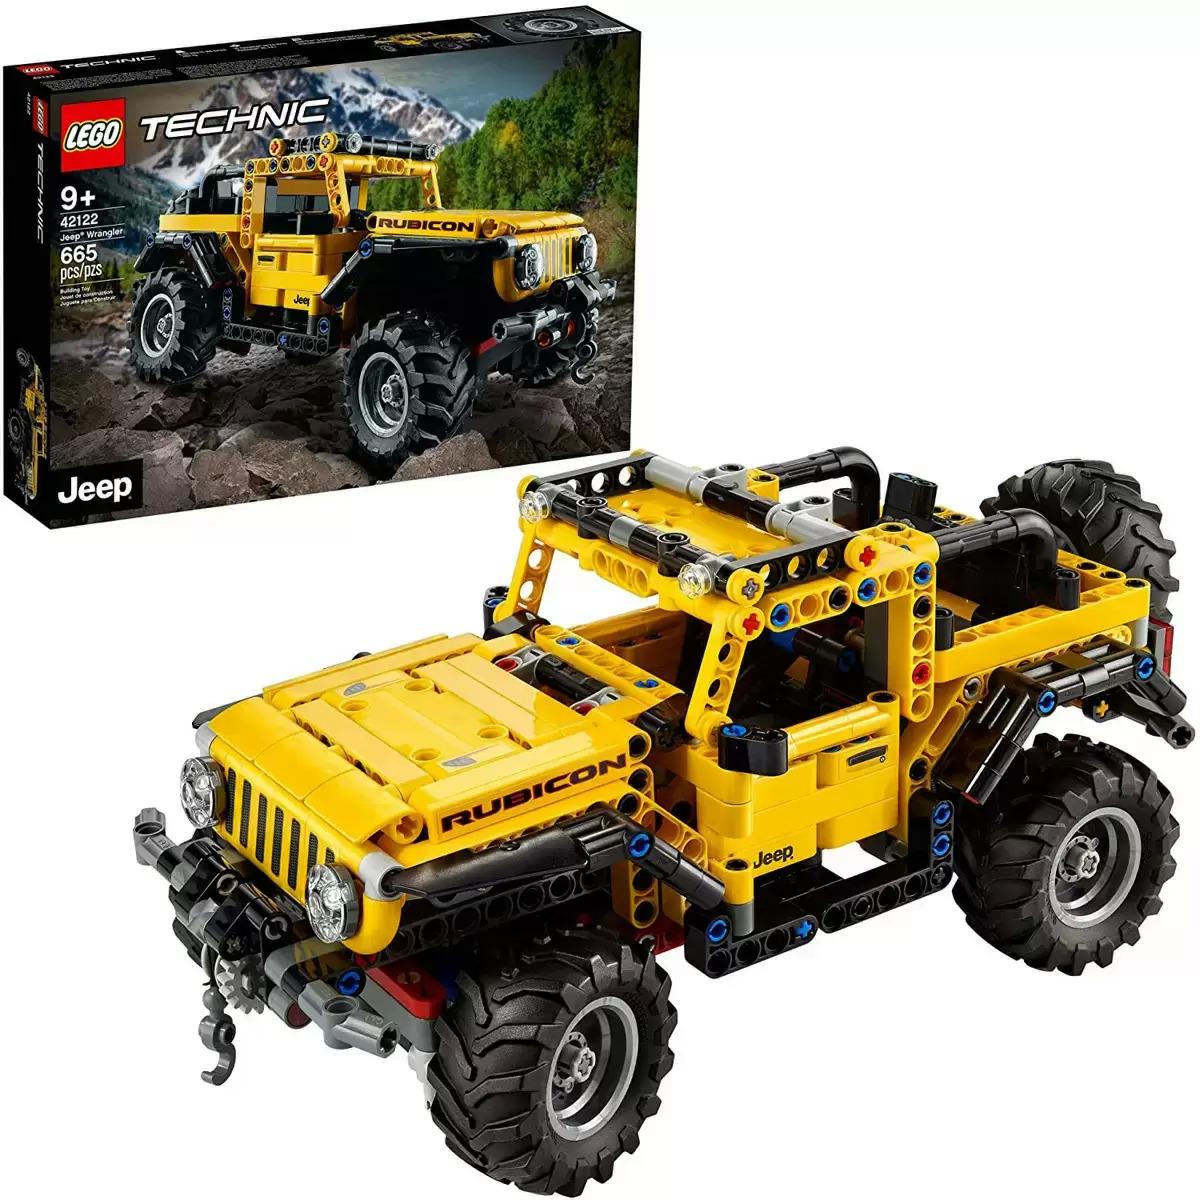 LEGO Technic Jeep Wrangler Building Kit for $37.99 Shipped